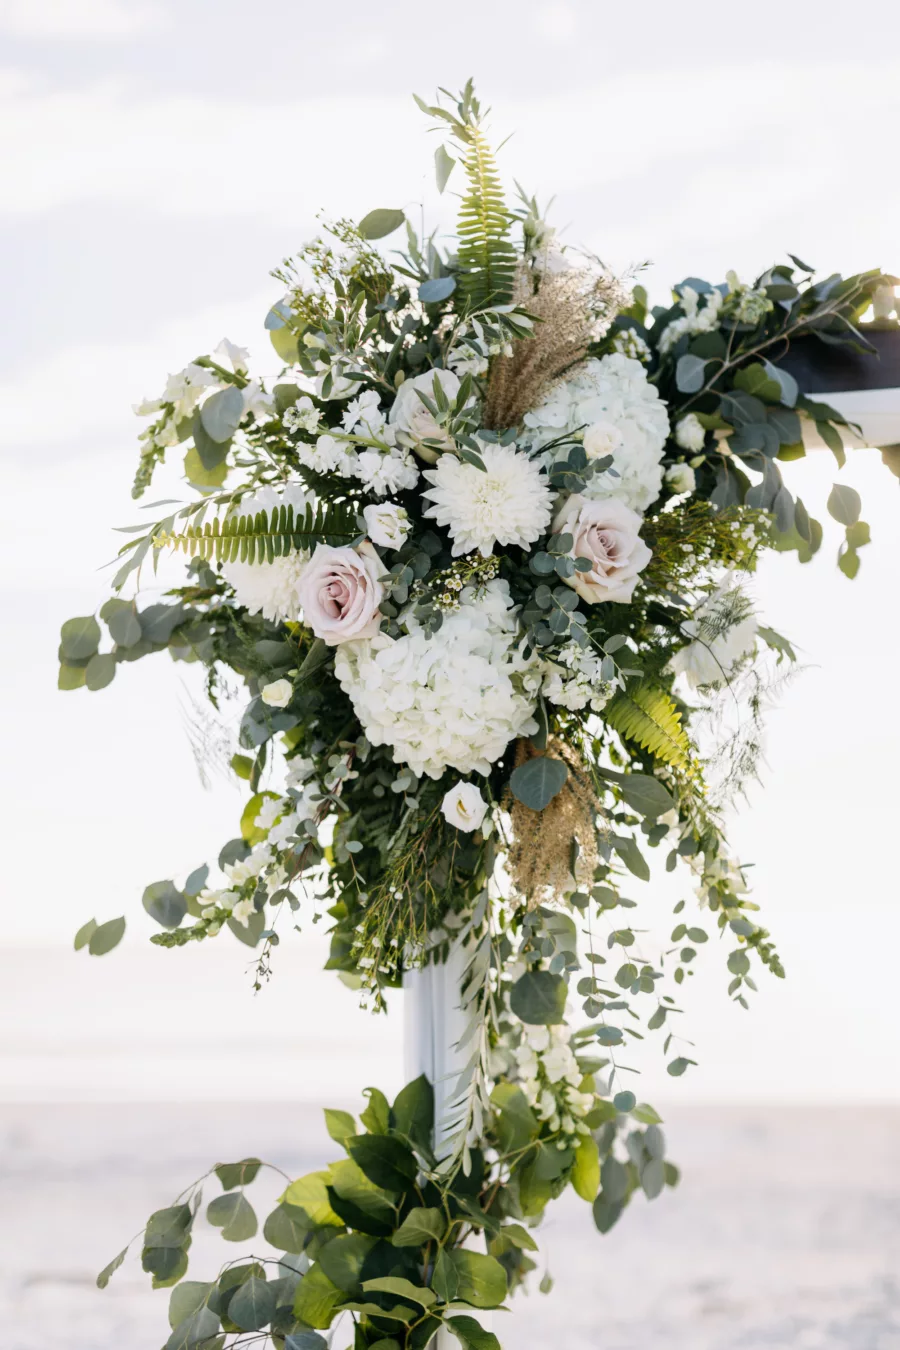 White Hydrangeas, Roses, Chrysanthemums, Fern, and Greenery Fall Boho Beach Wedding Ceremony Arbor Flower Arrangement Inspiration